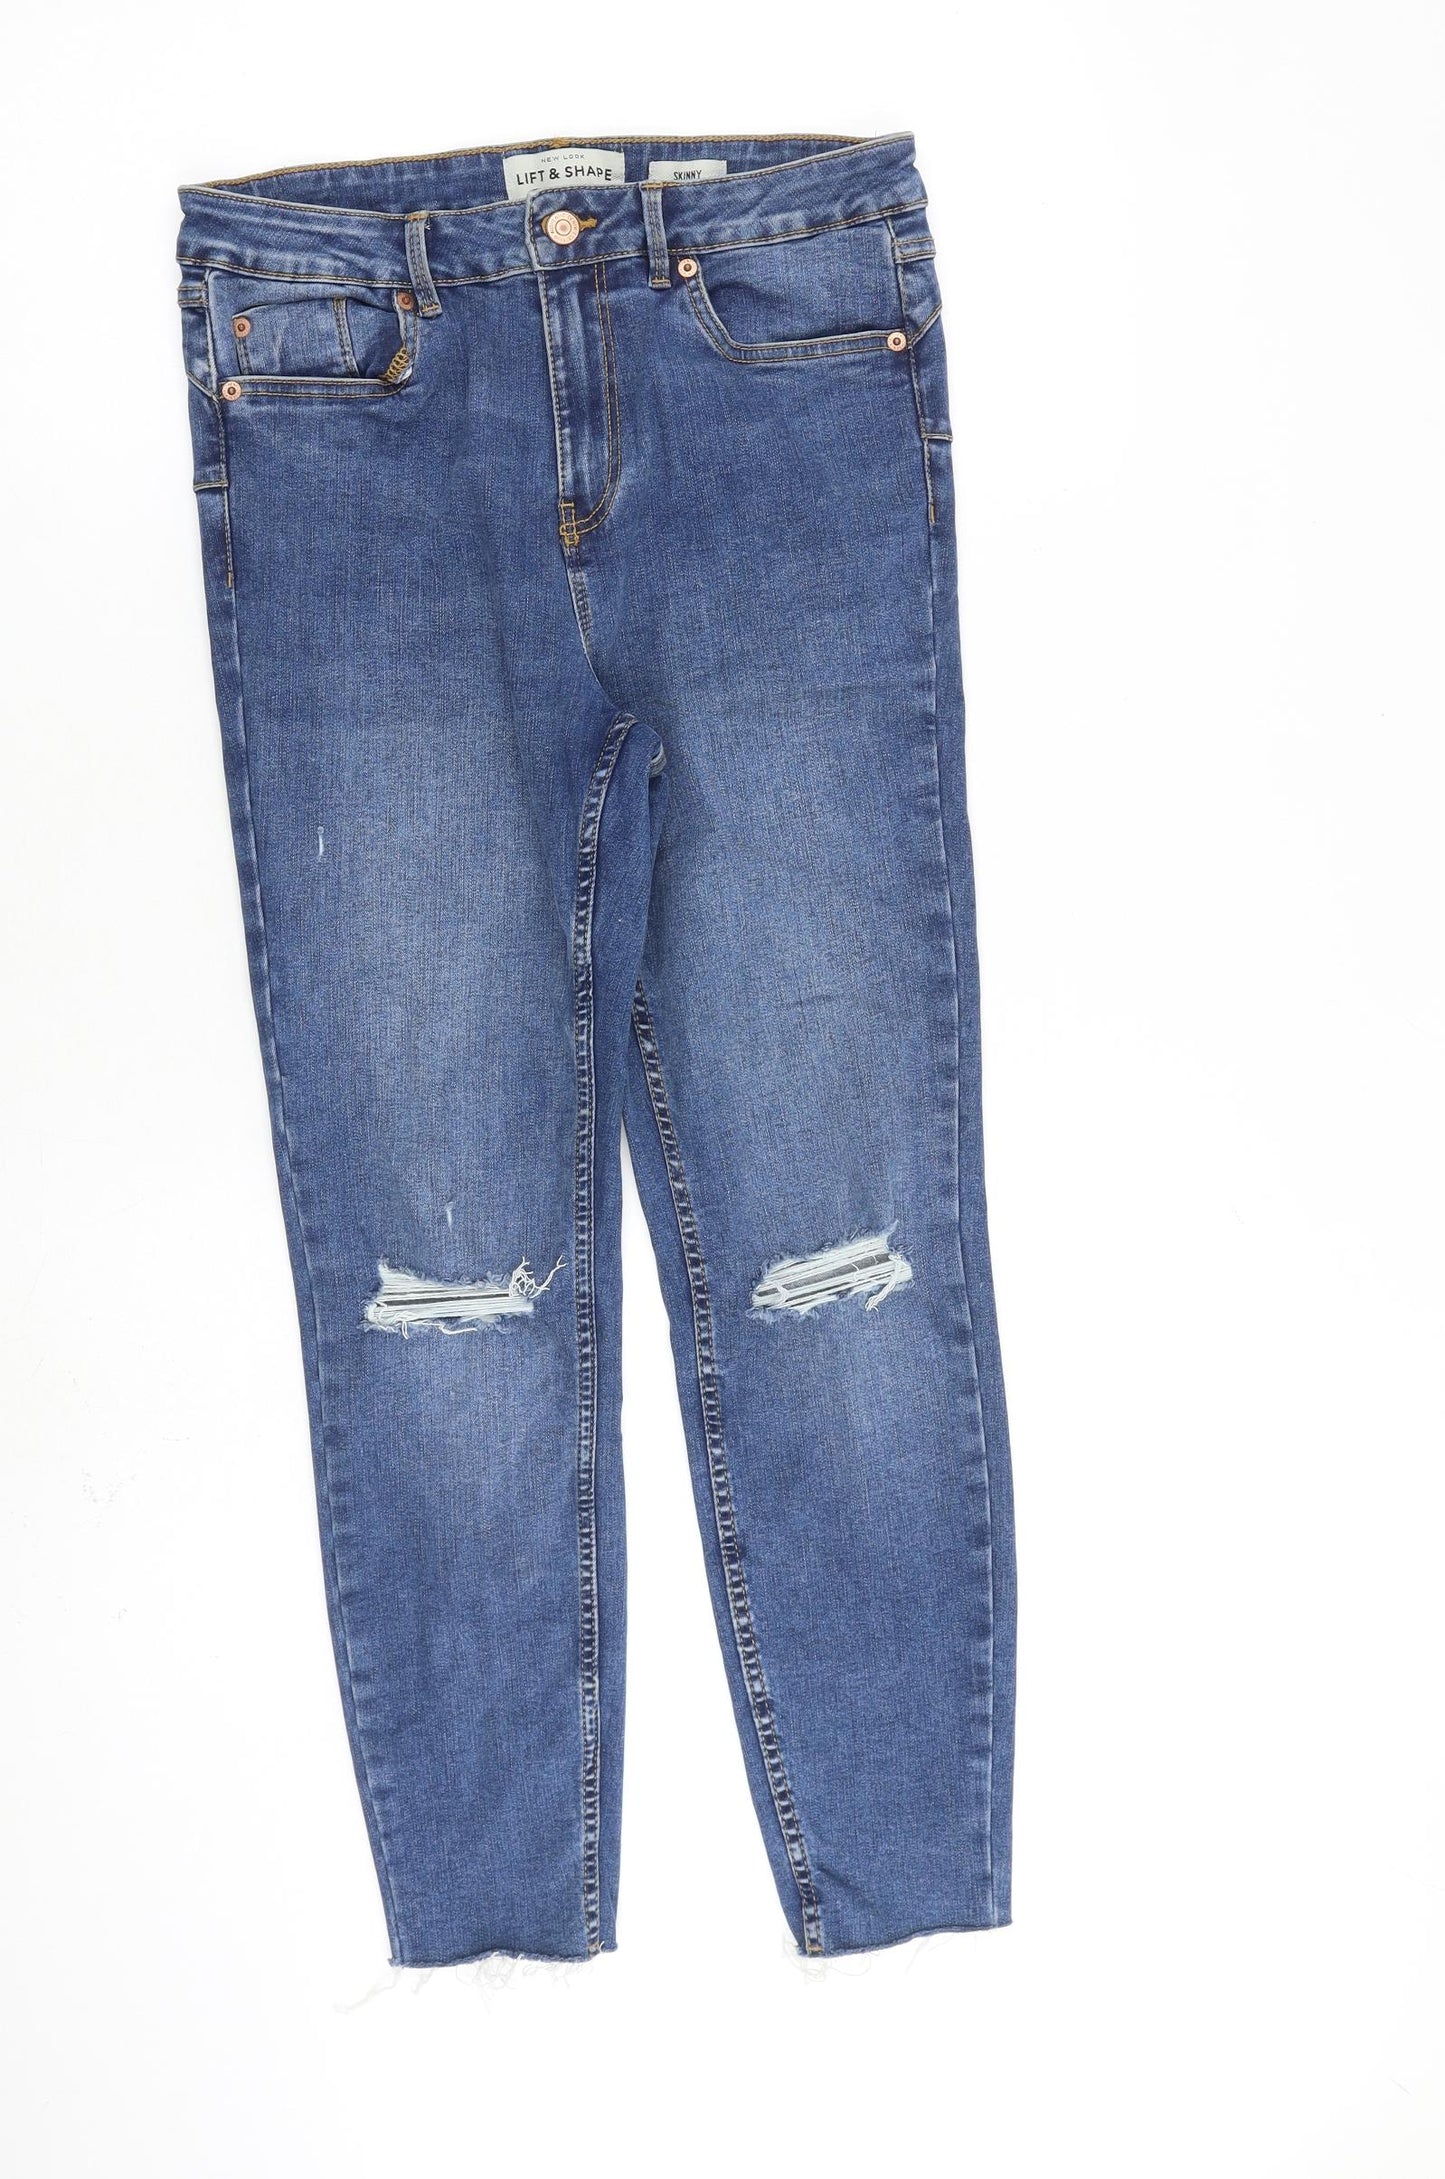 New Look Womens Blue Cotton Skinny Jeans Size 12 L25 in Slim Zip - Raw Hem